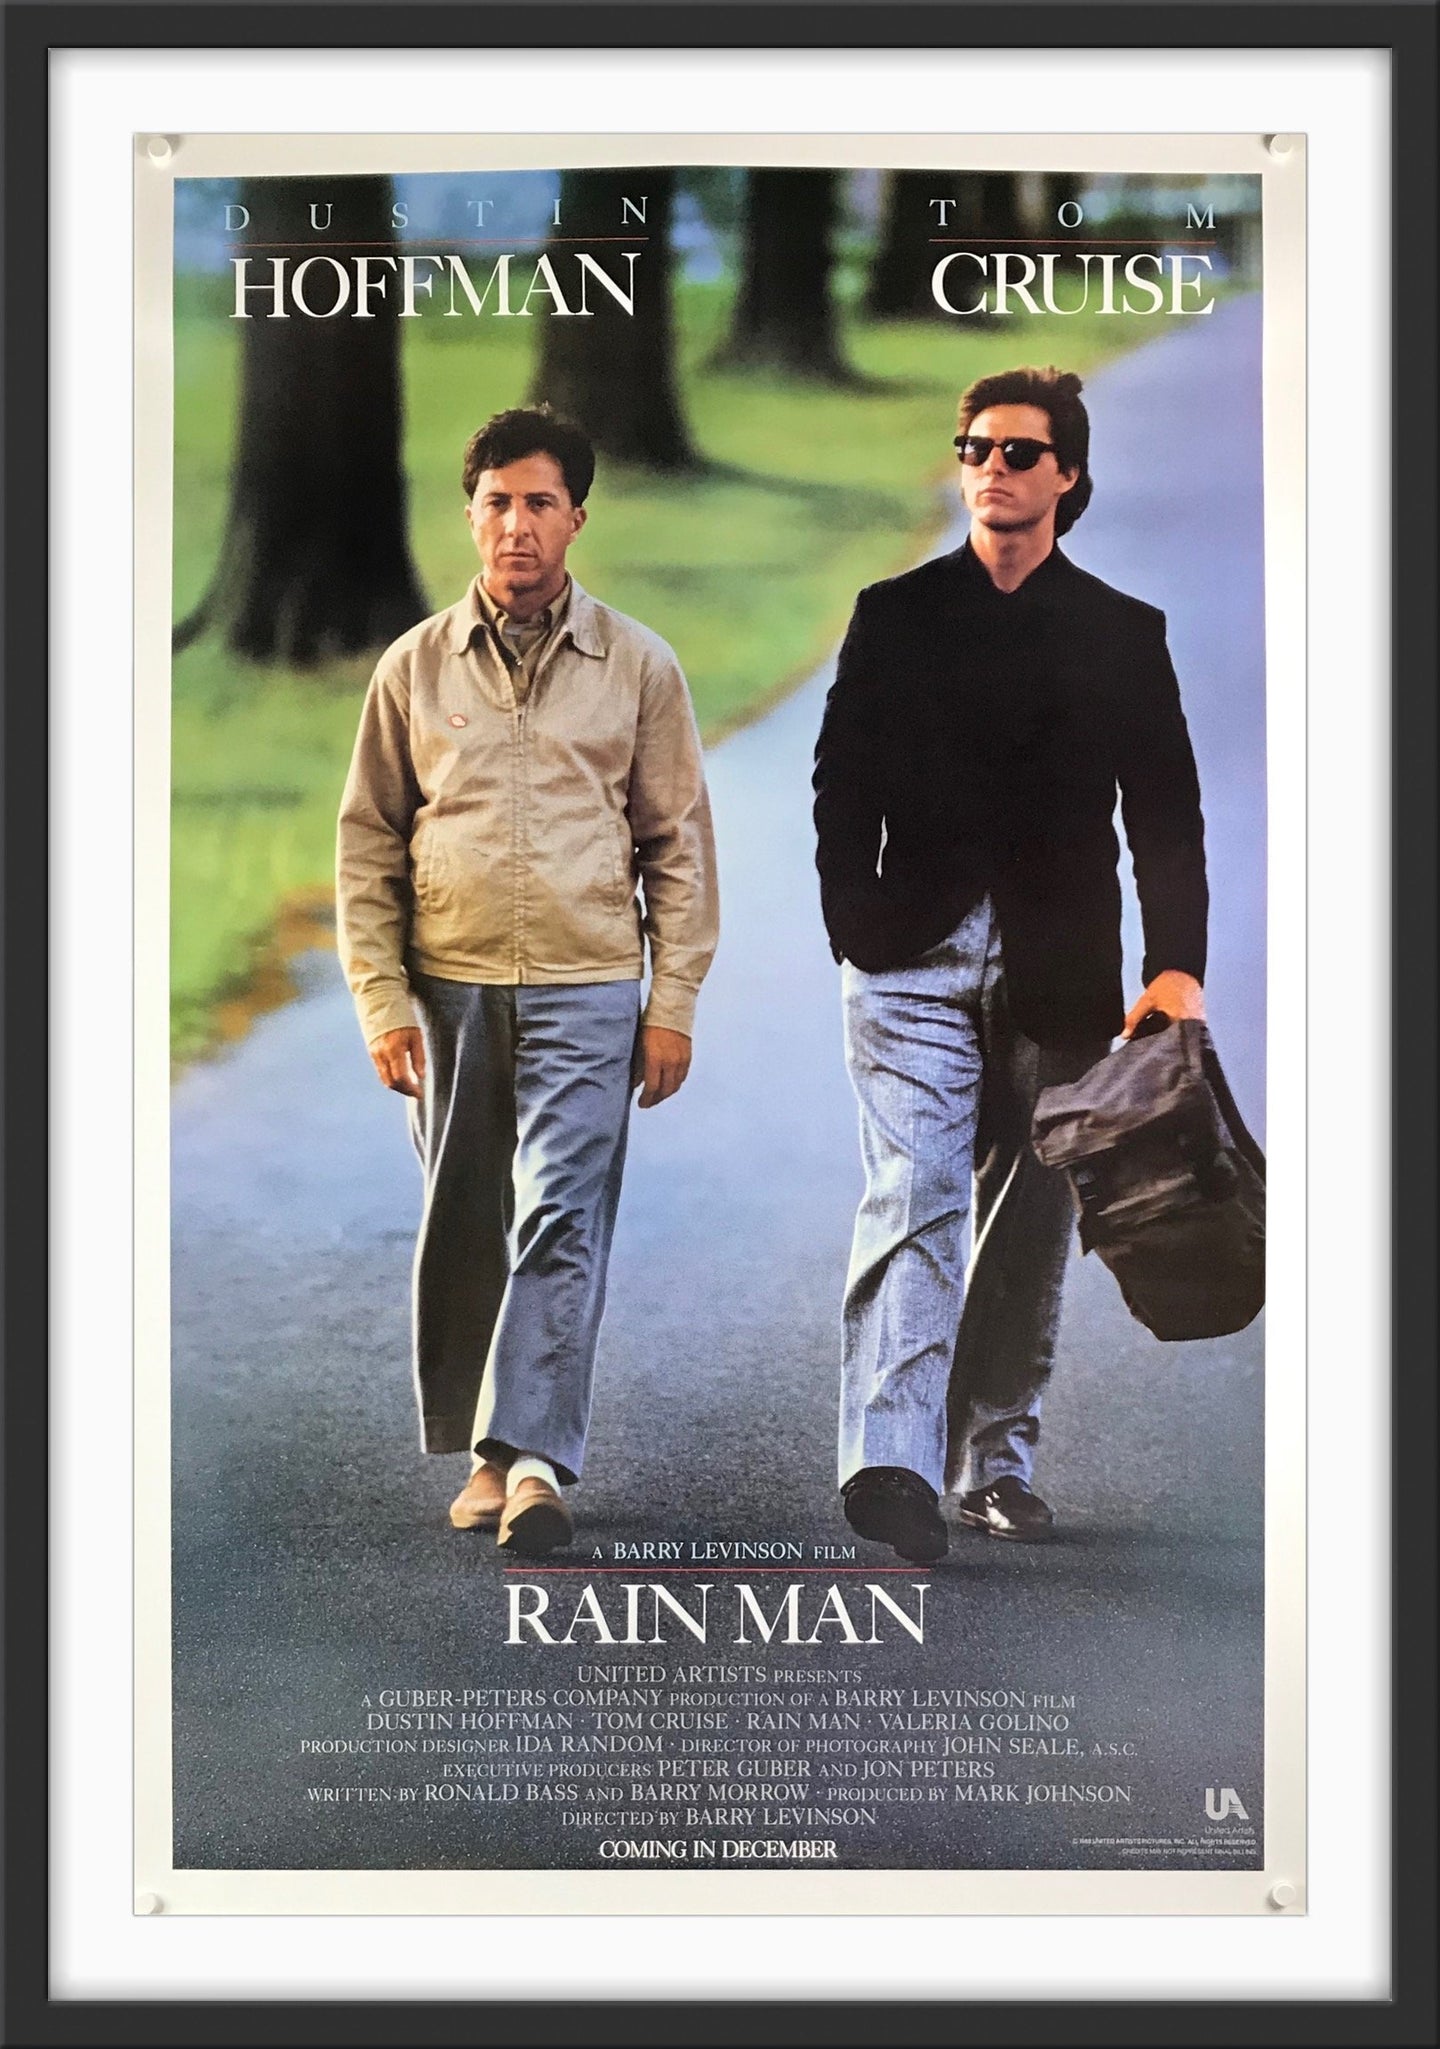 An original movie poster for the film Rain Man